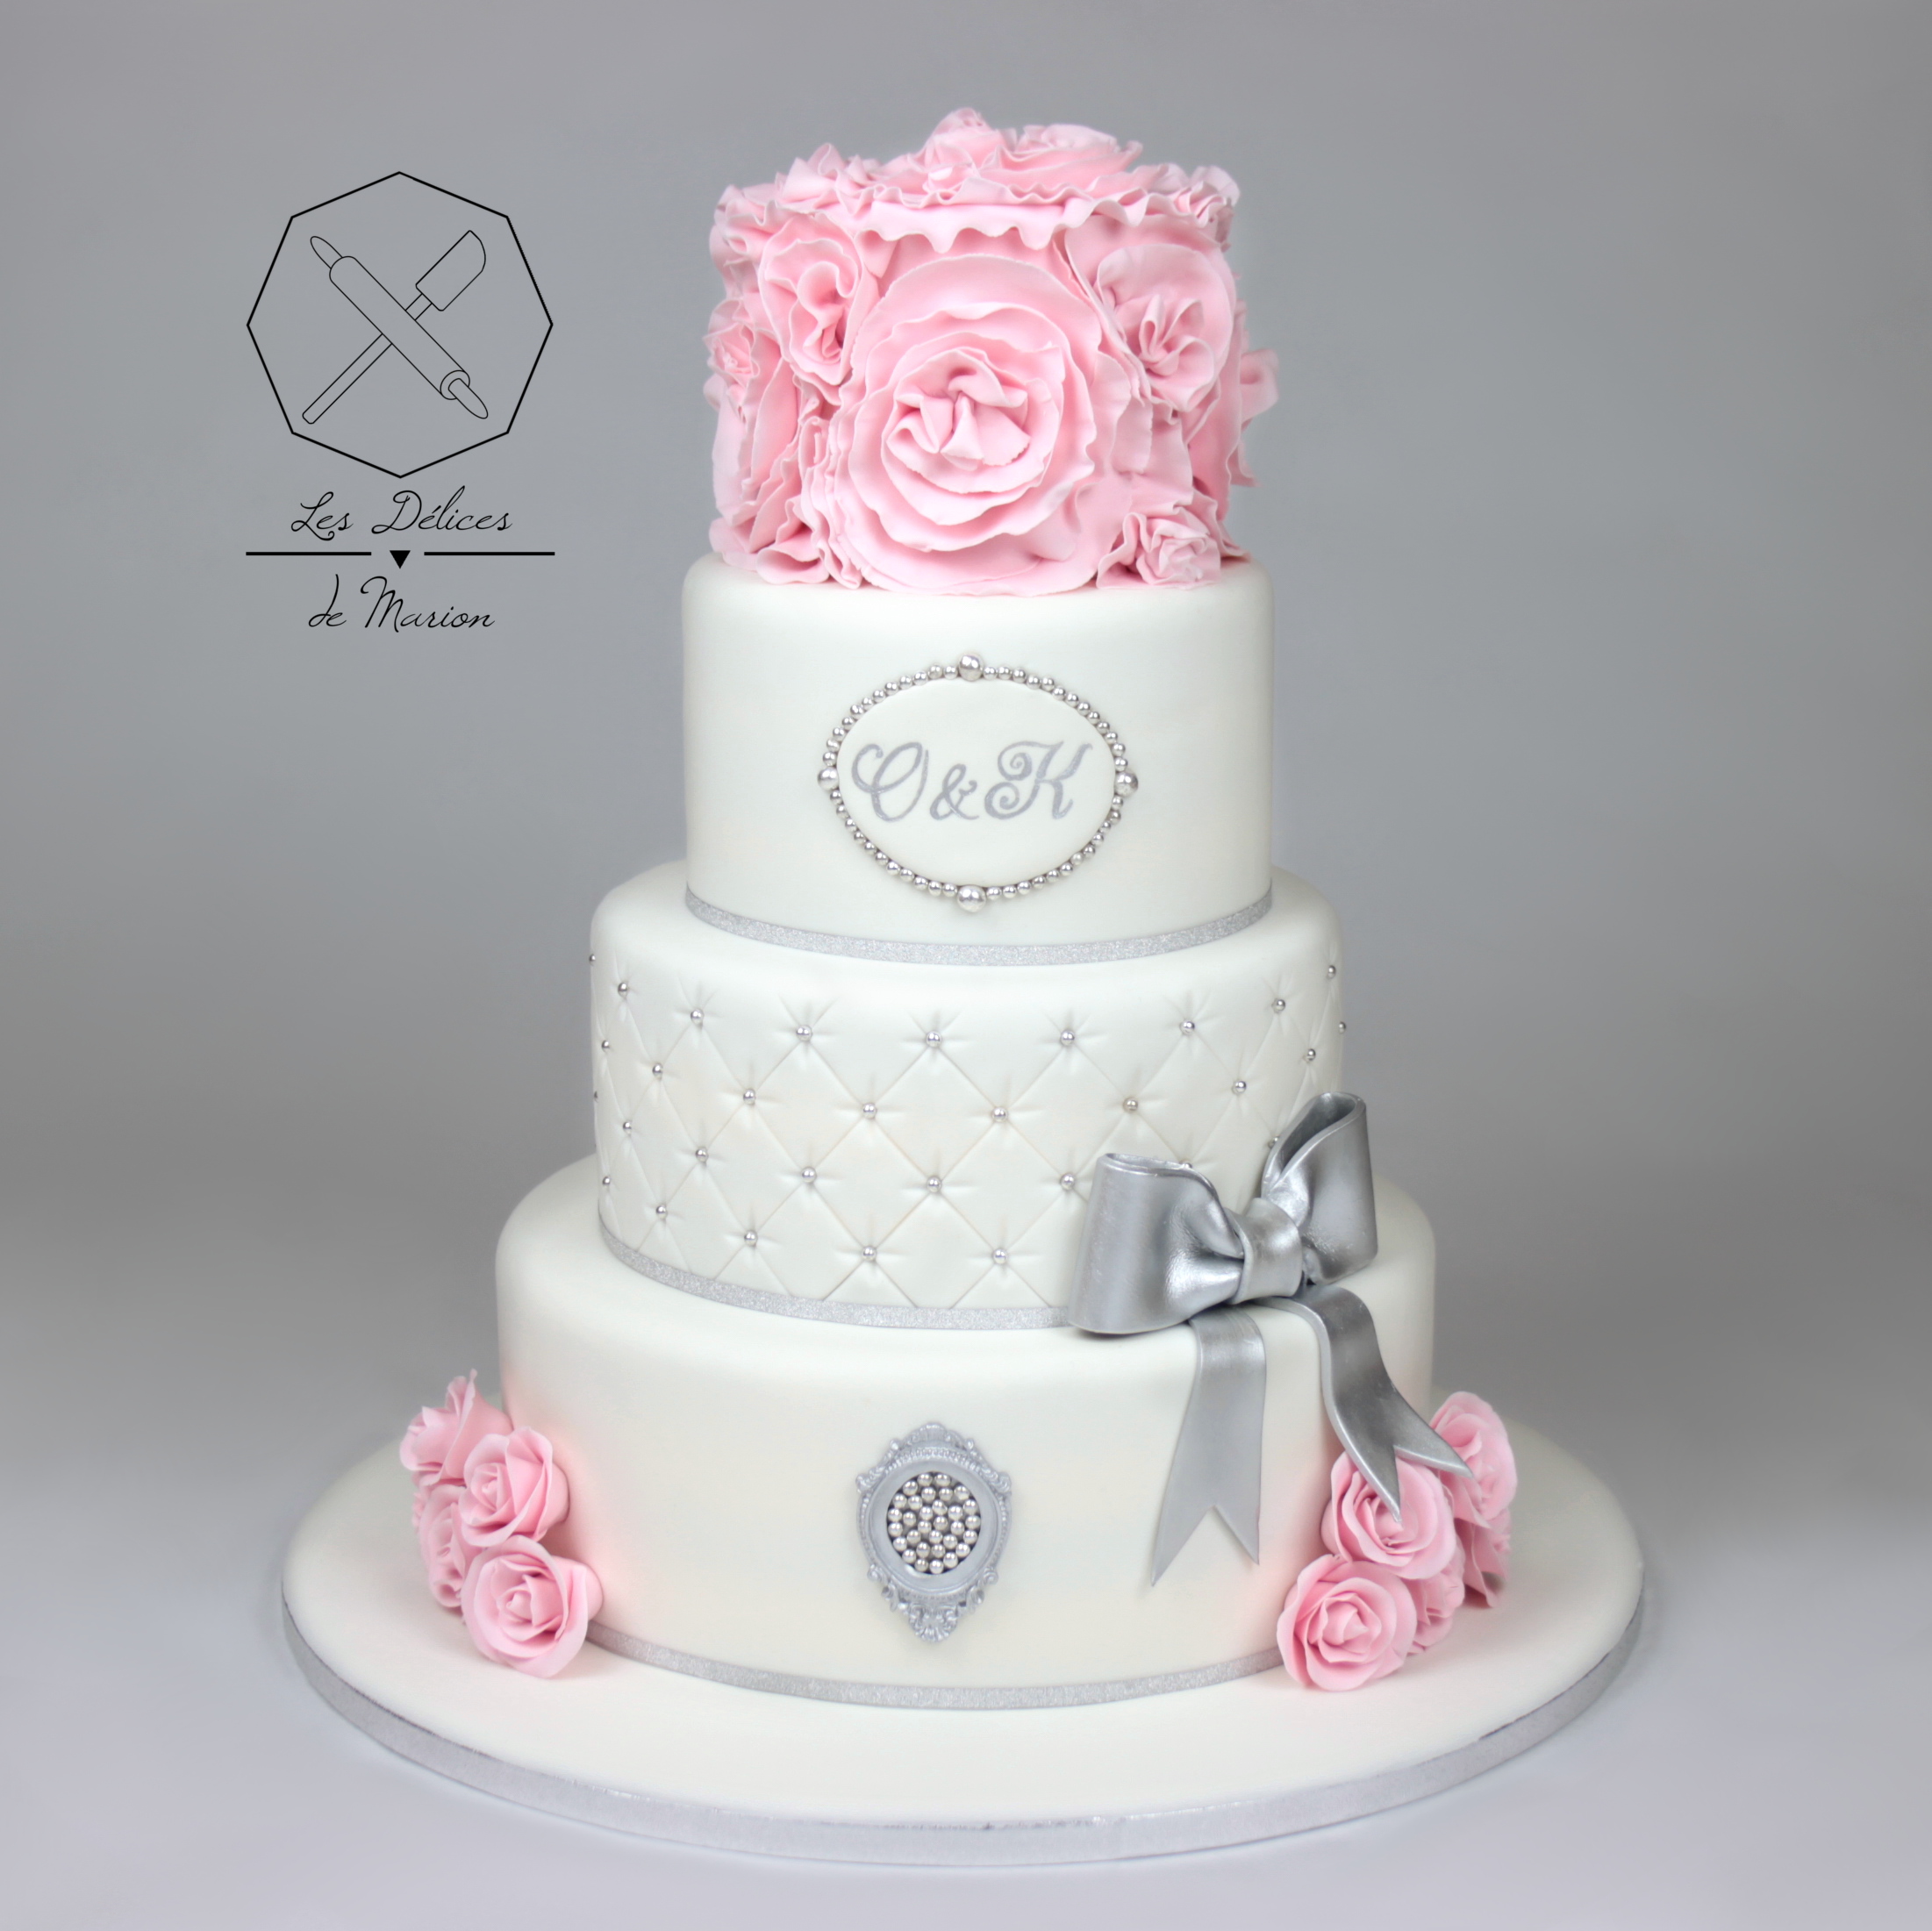 gateau_mariage_wedding-cake_rose_argent_rosette_cake-design_delices-marion